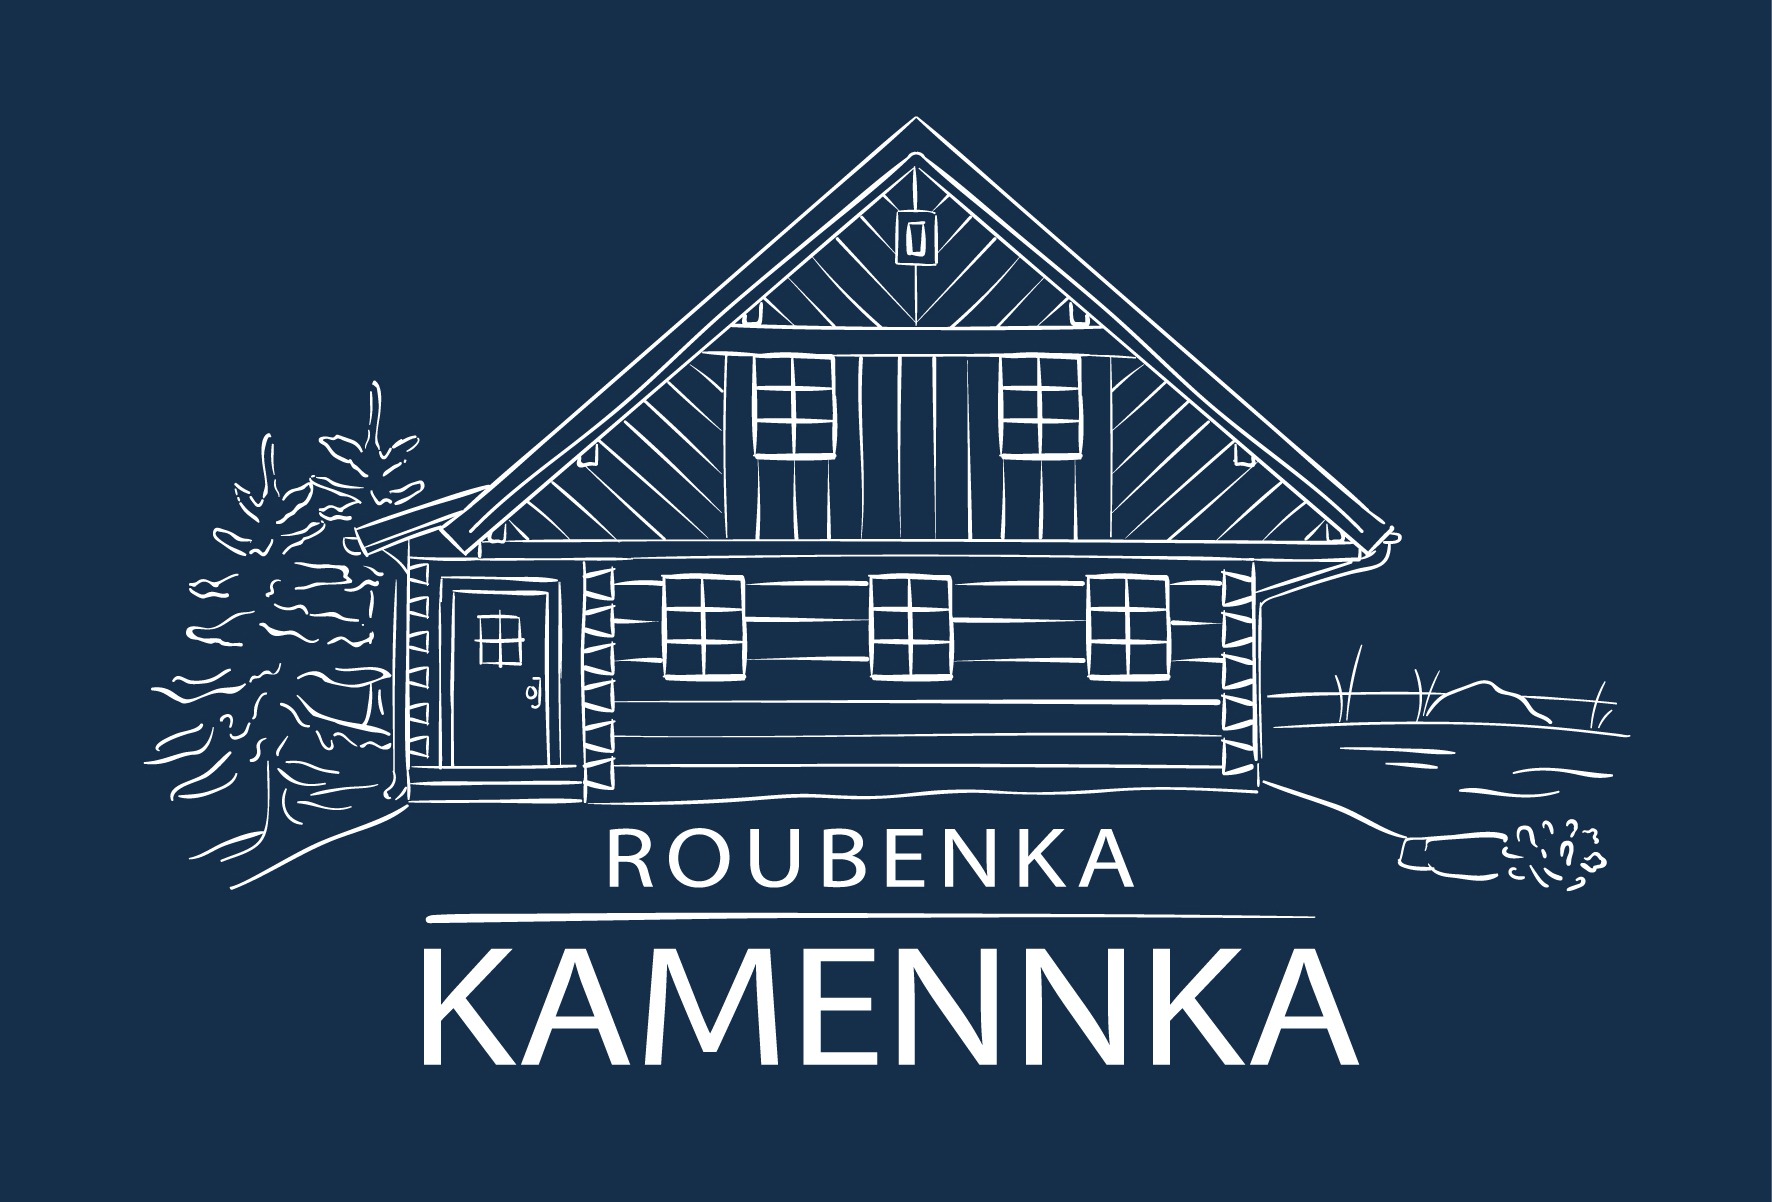 Roubenka Kamennka logo